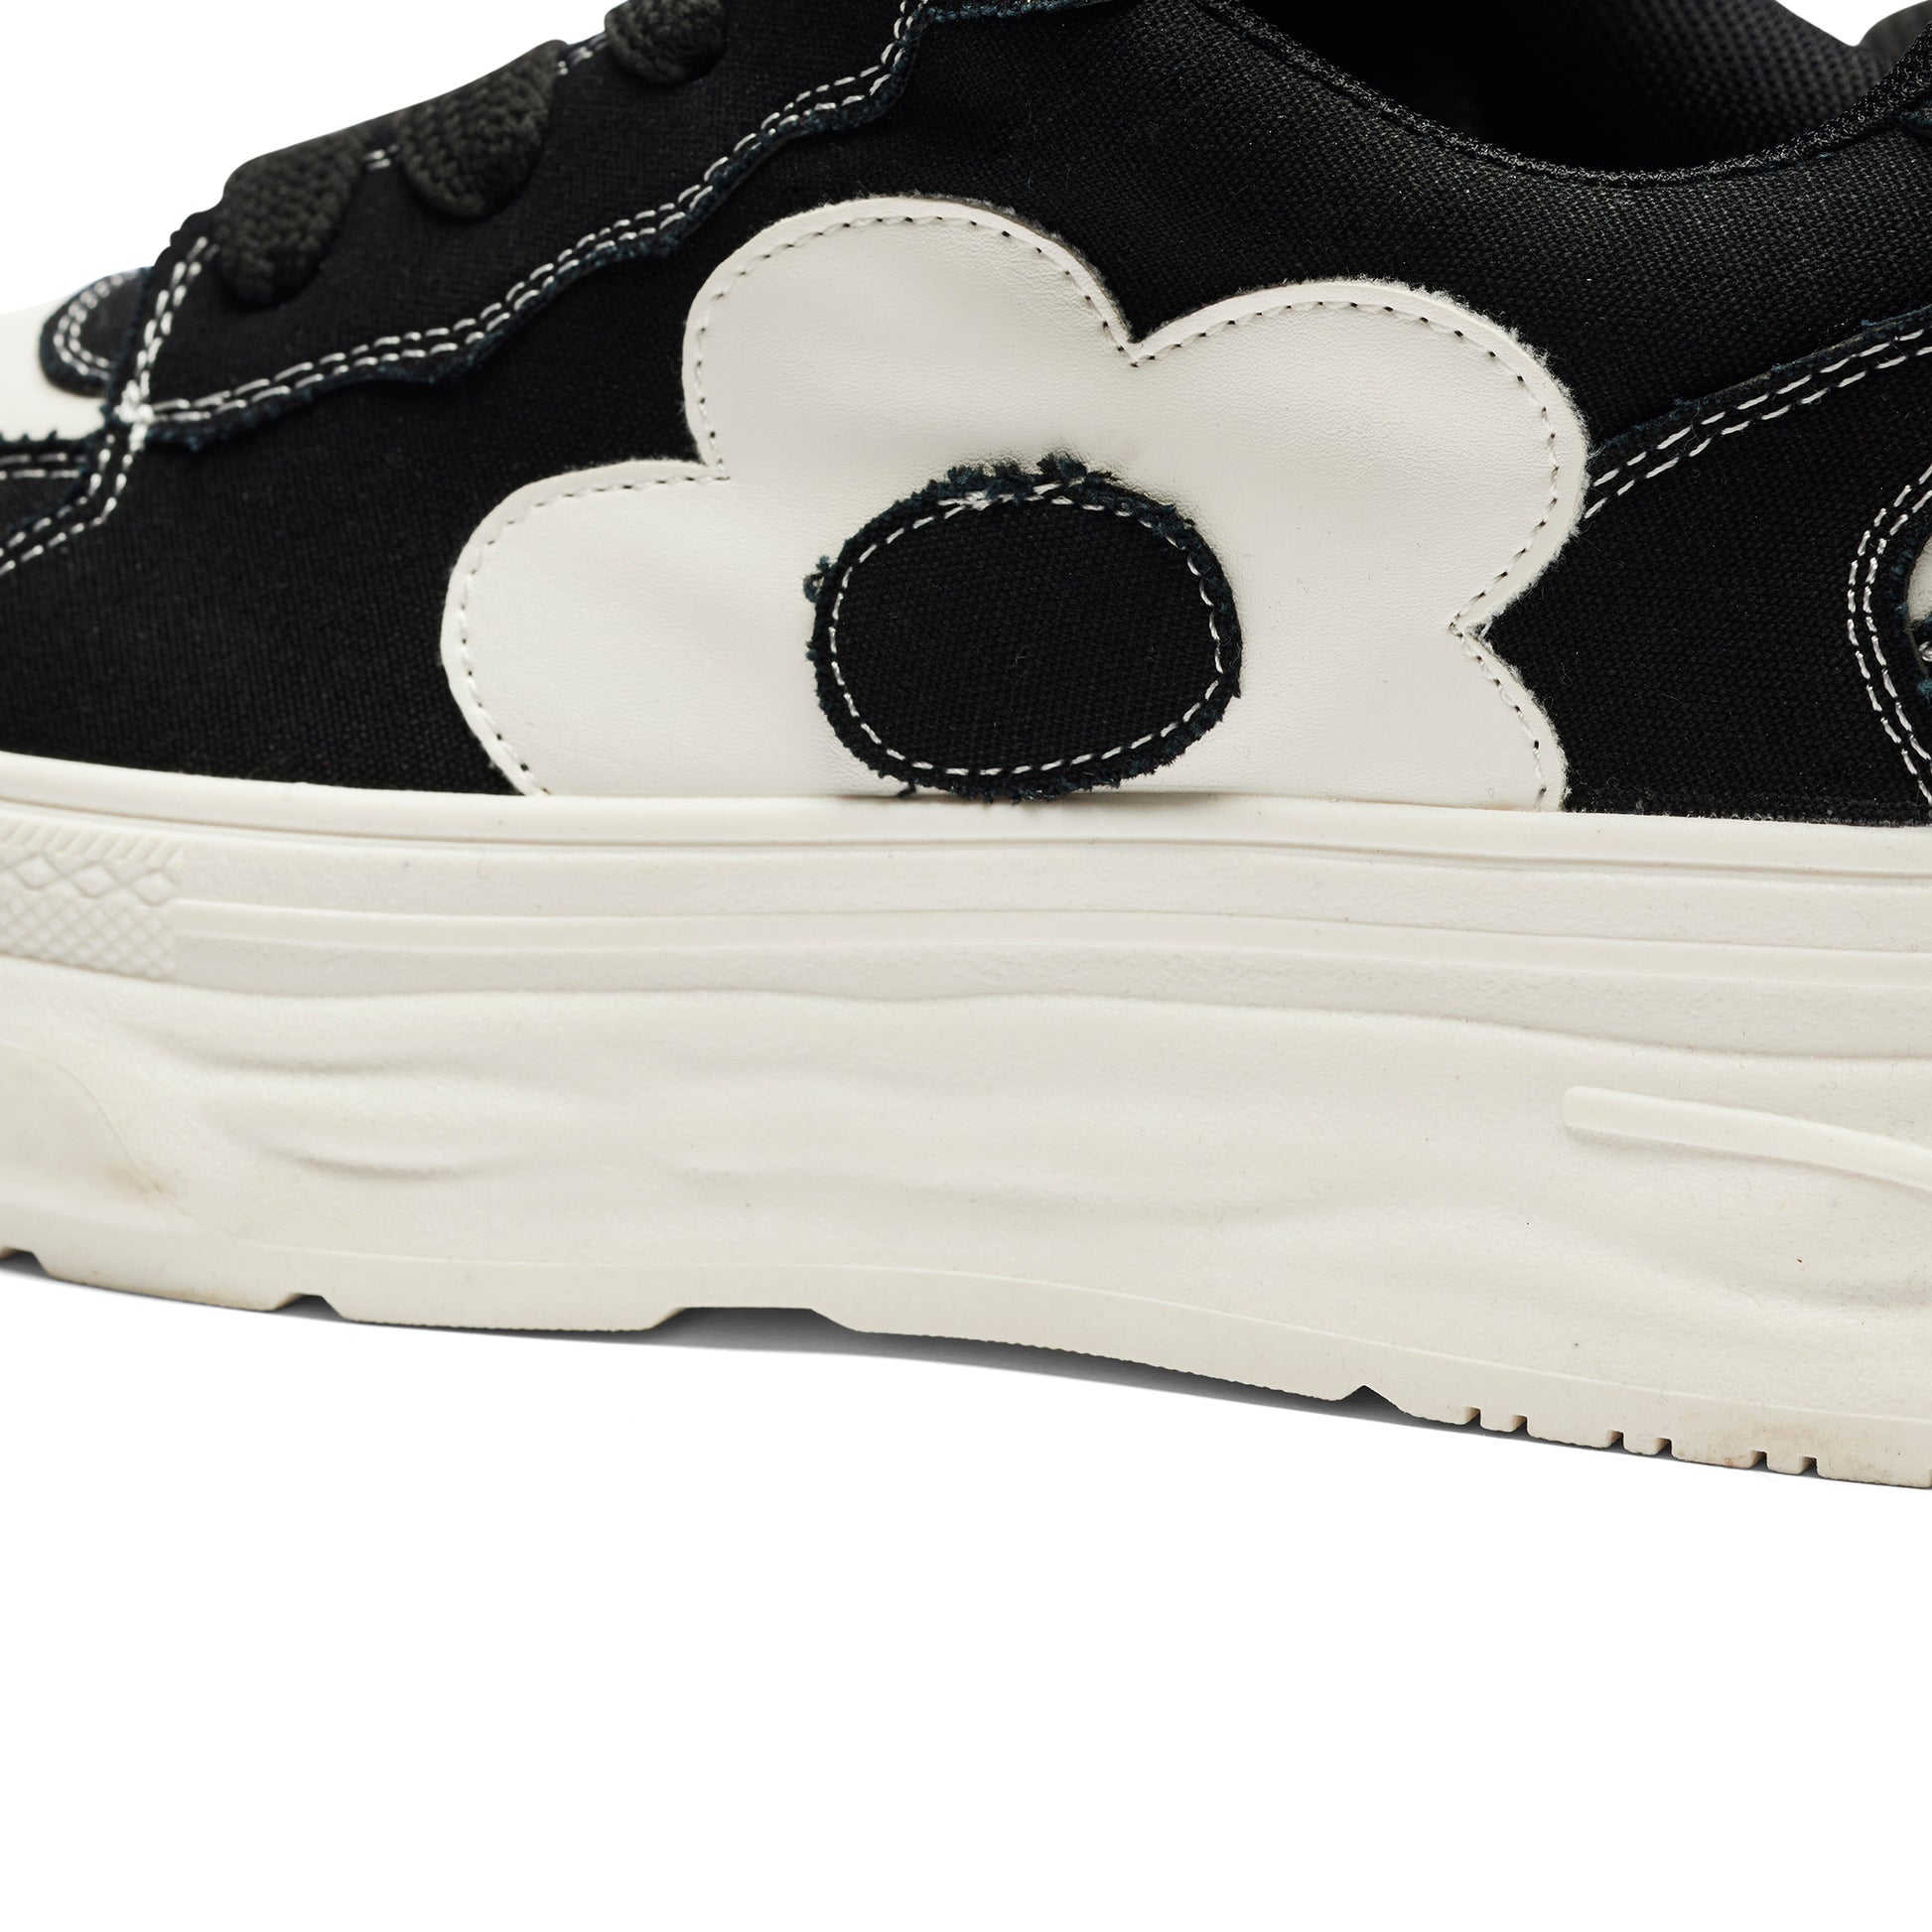 Petal Husk Chunky Trainers - Monochrome - Black & White - Koi Footwear - Sole Detail